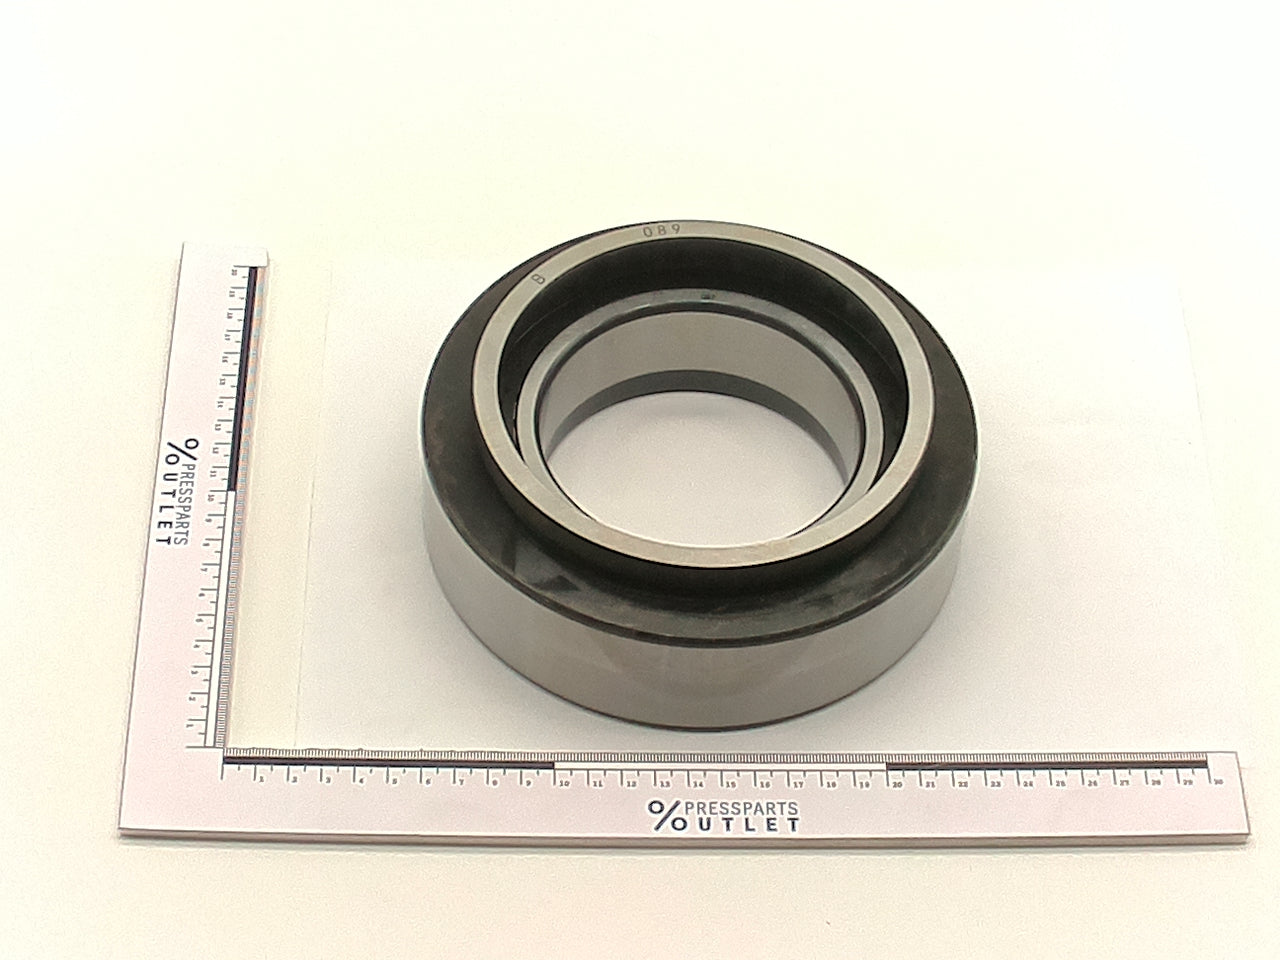 Cylindr. roller bearing AS F-230089.02 B - L4.007.521 /06 - Zylinderrollenlager AS F-230089.02 B